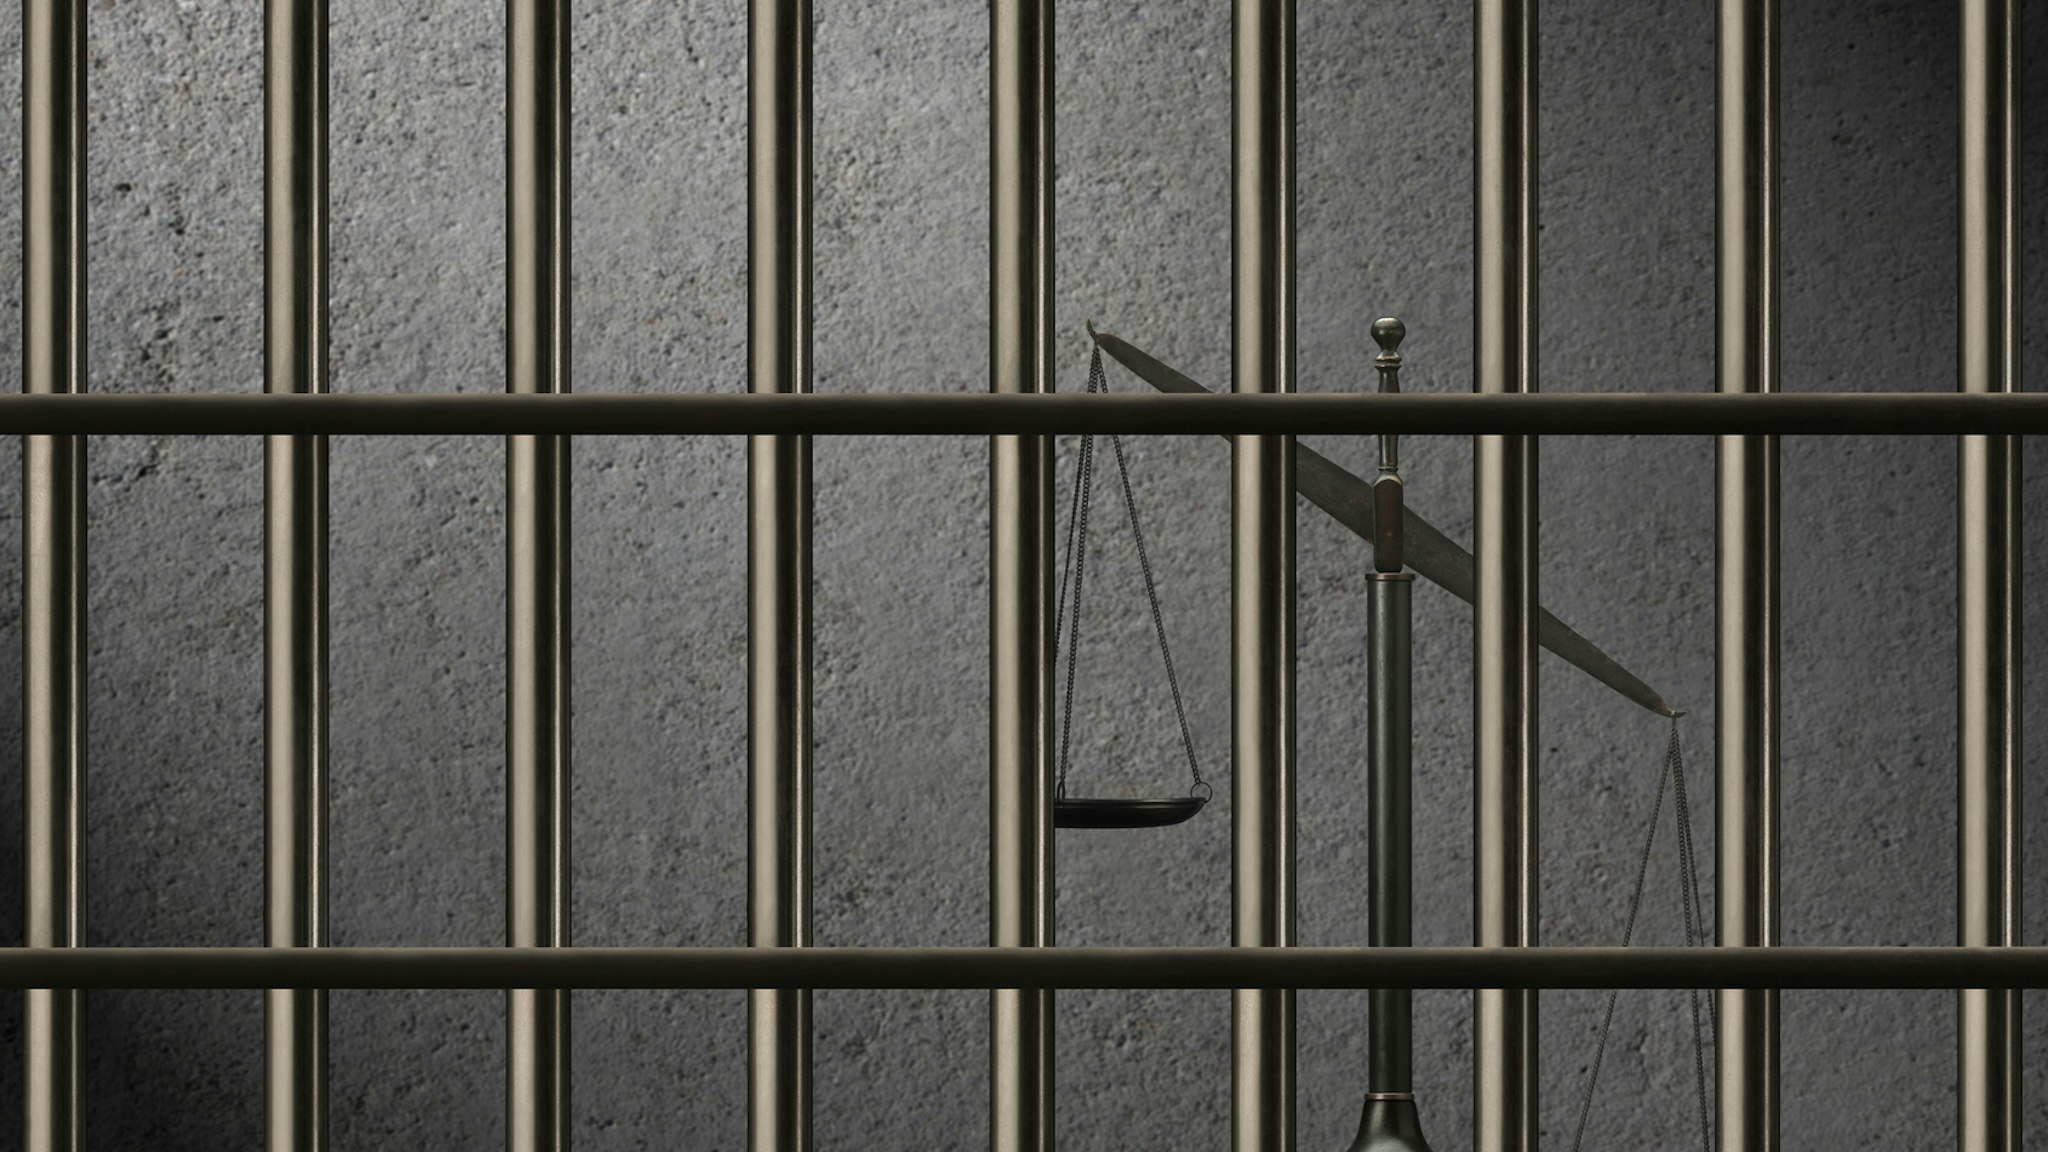 Unbalanced Scales of Justice Behind Bars.